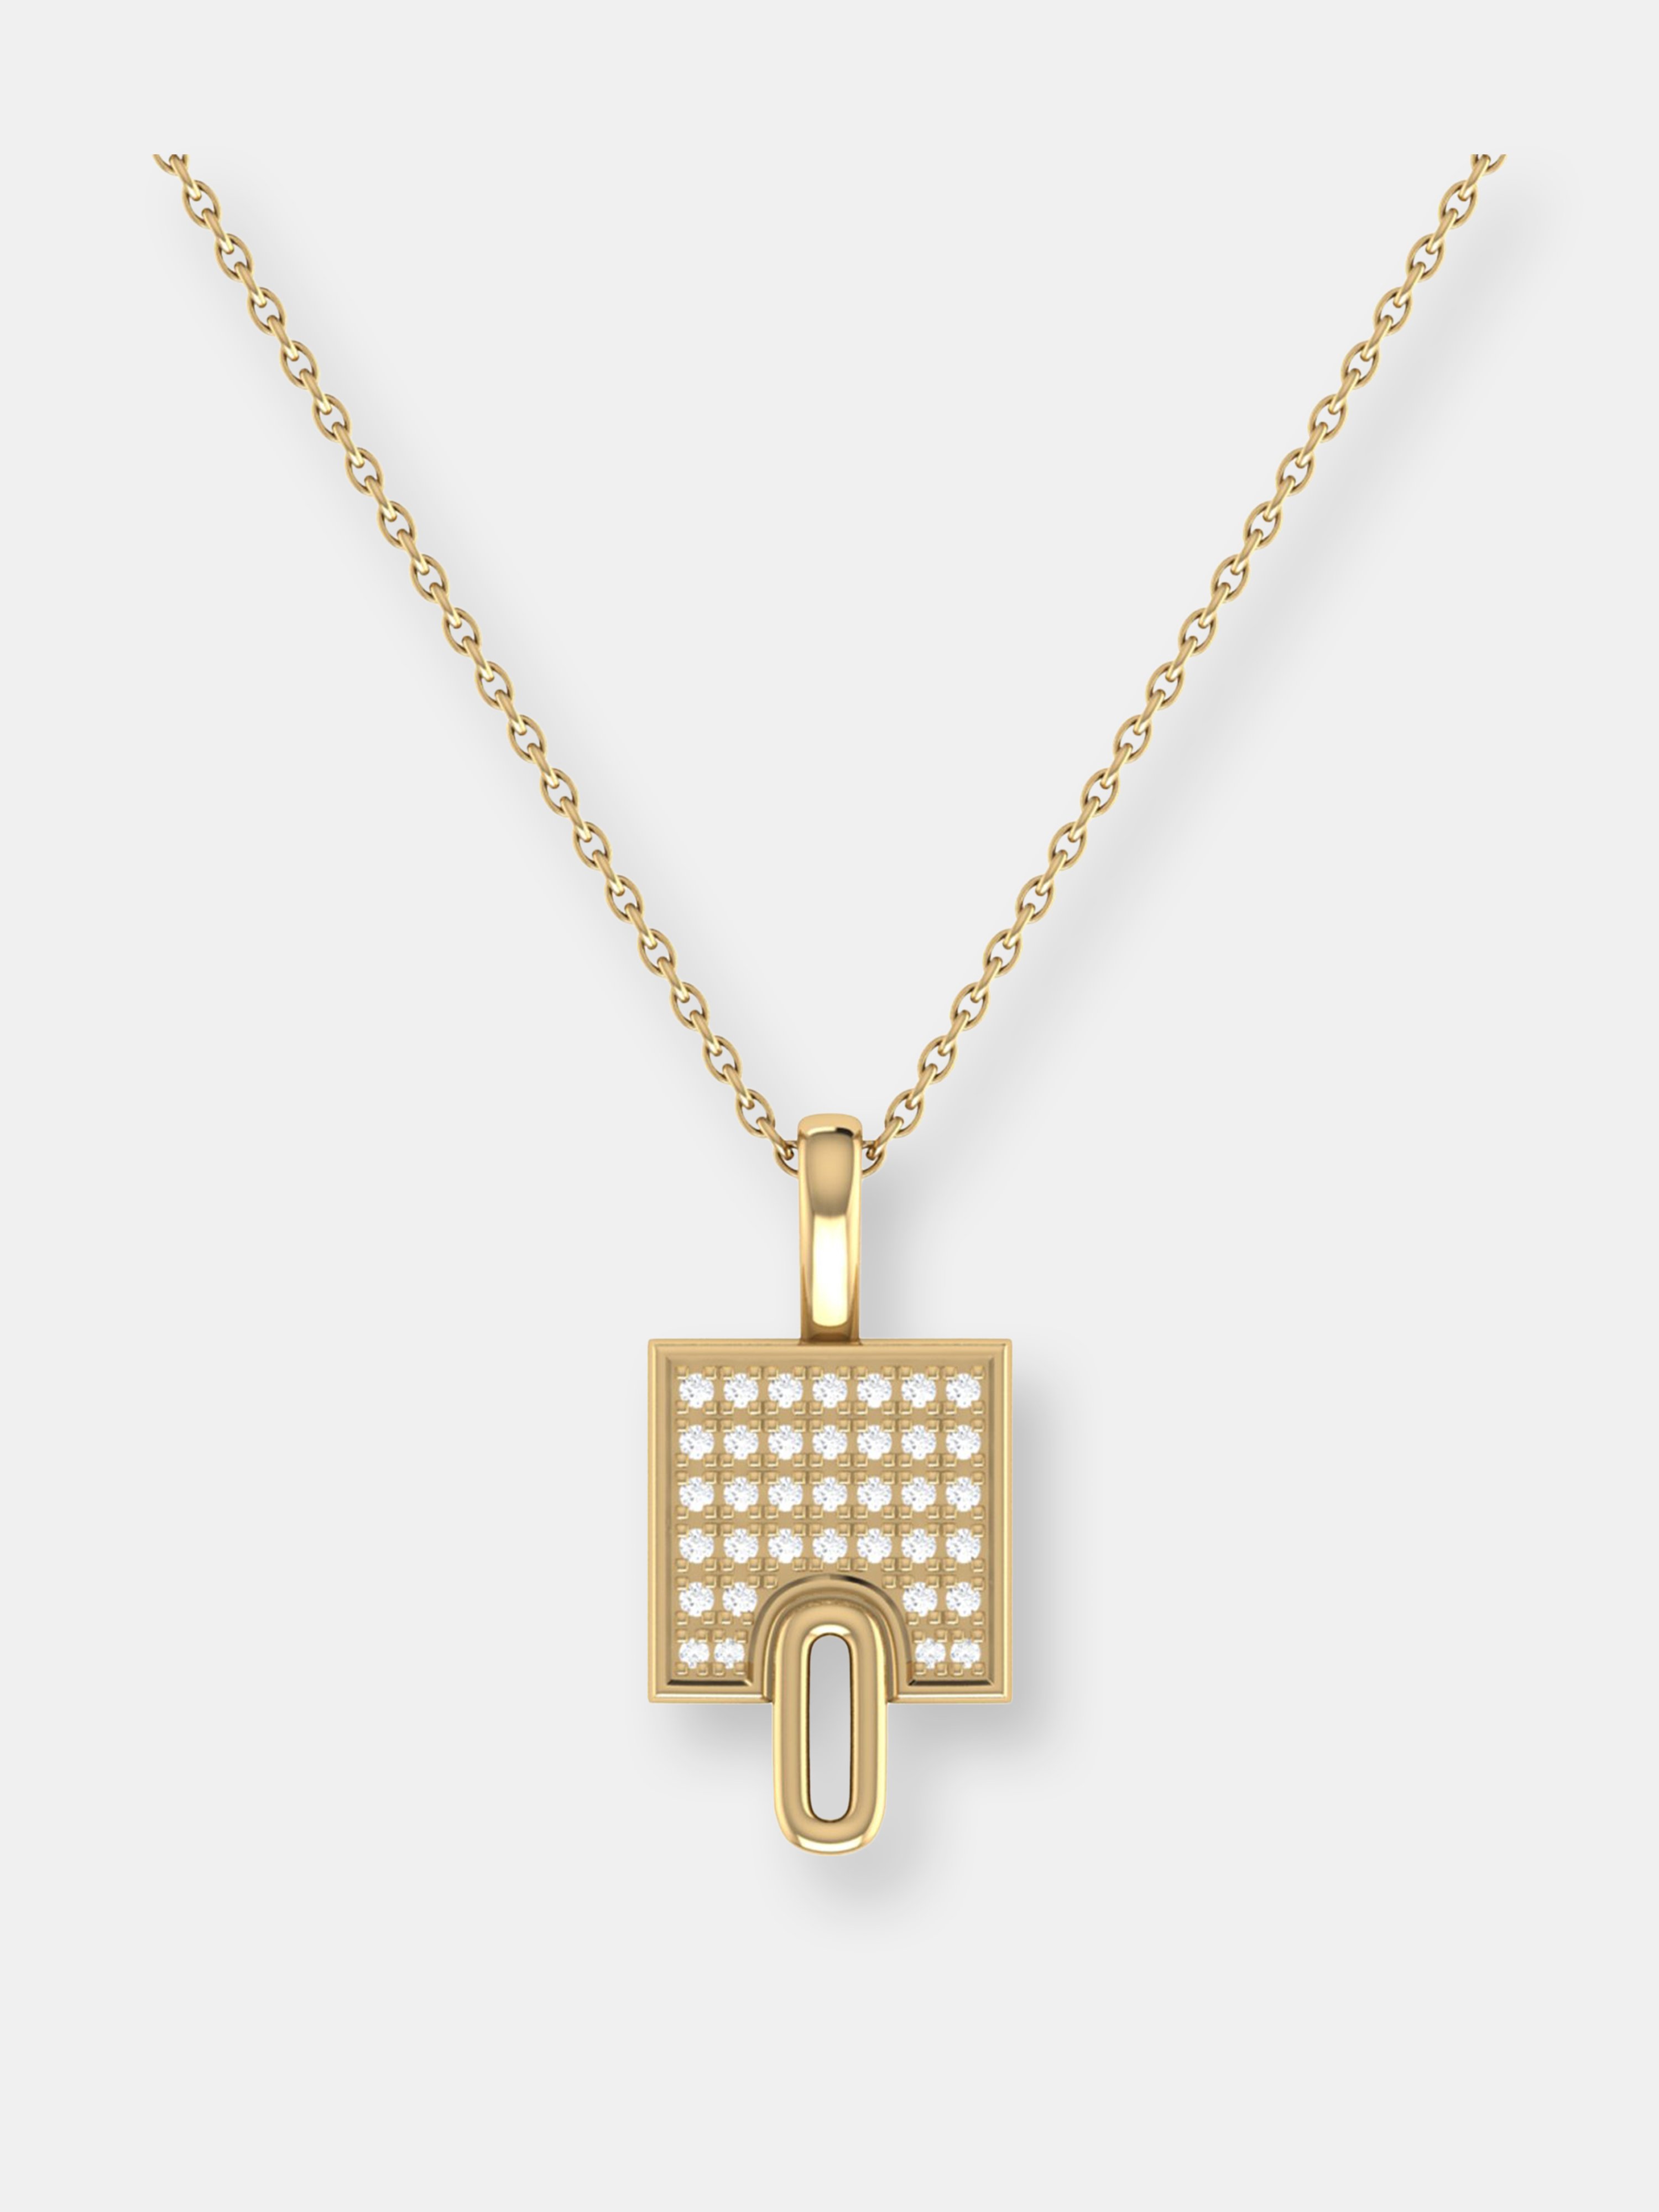 Luvmyjewelry Sidewalk Square Diamond Pendant In 14k Yellow Gold Vermeil On Sterling Silver